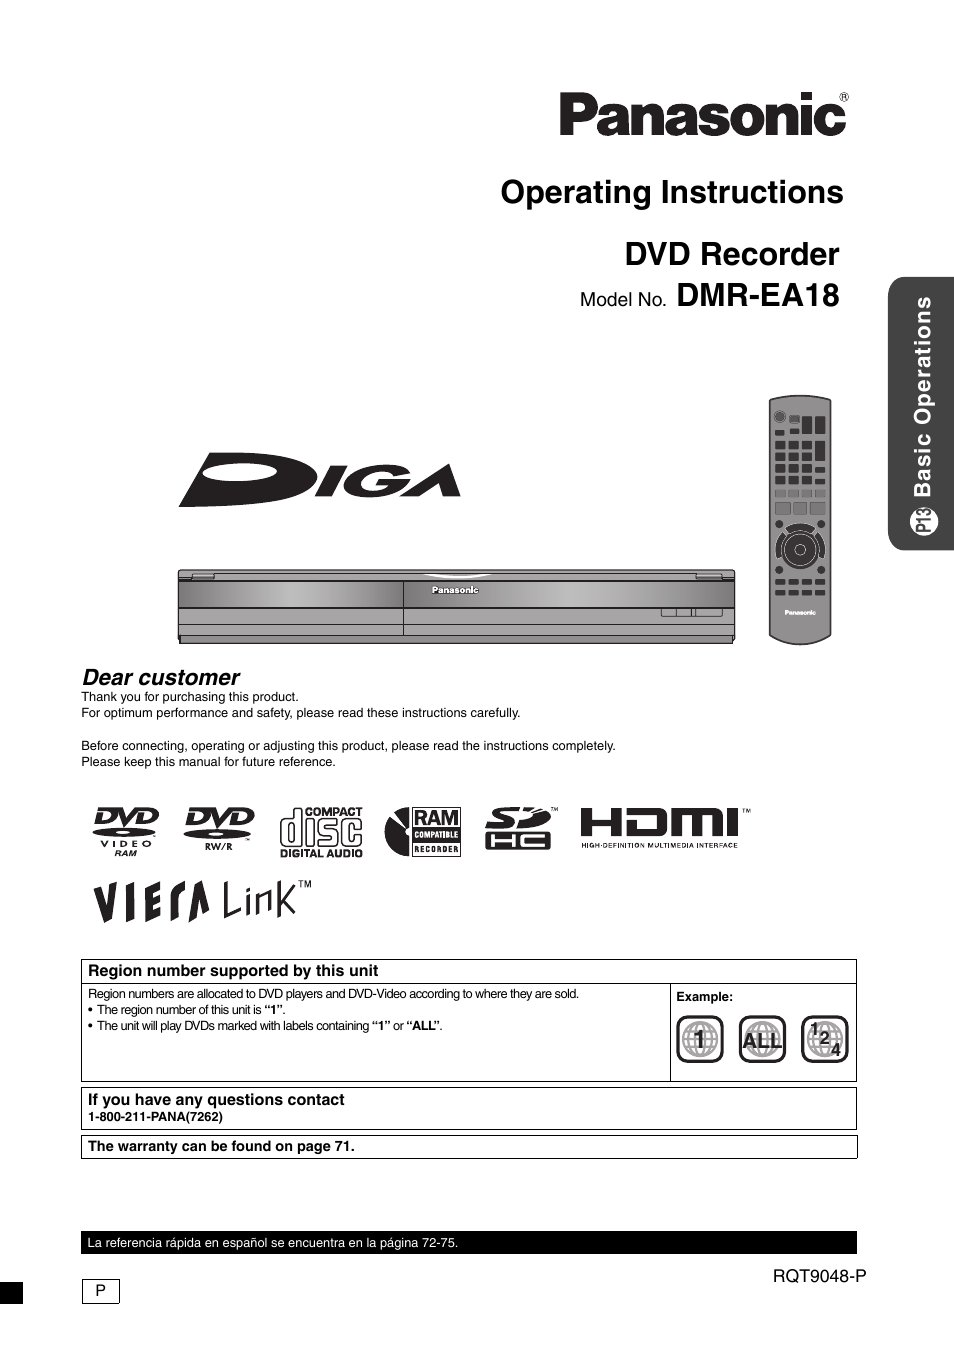 DMR-EA18 MANUAL PDF